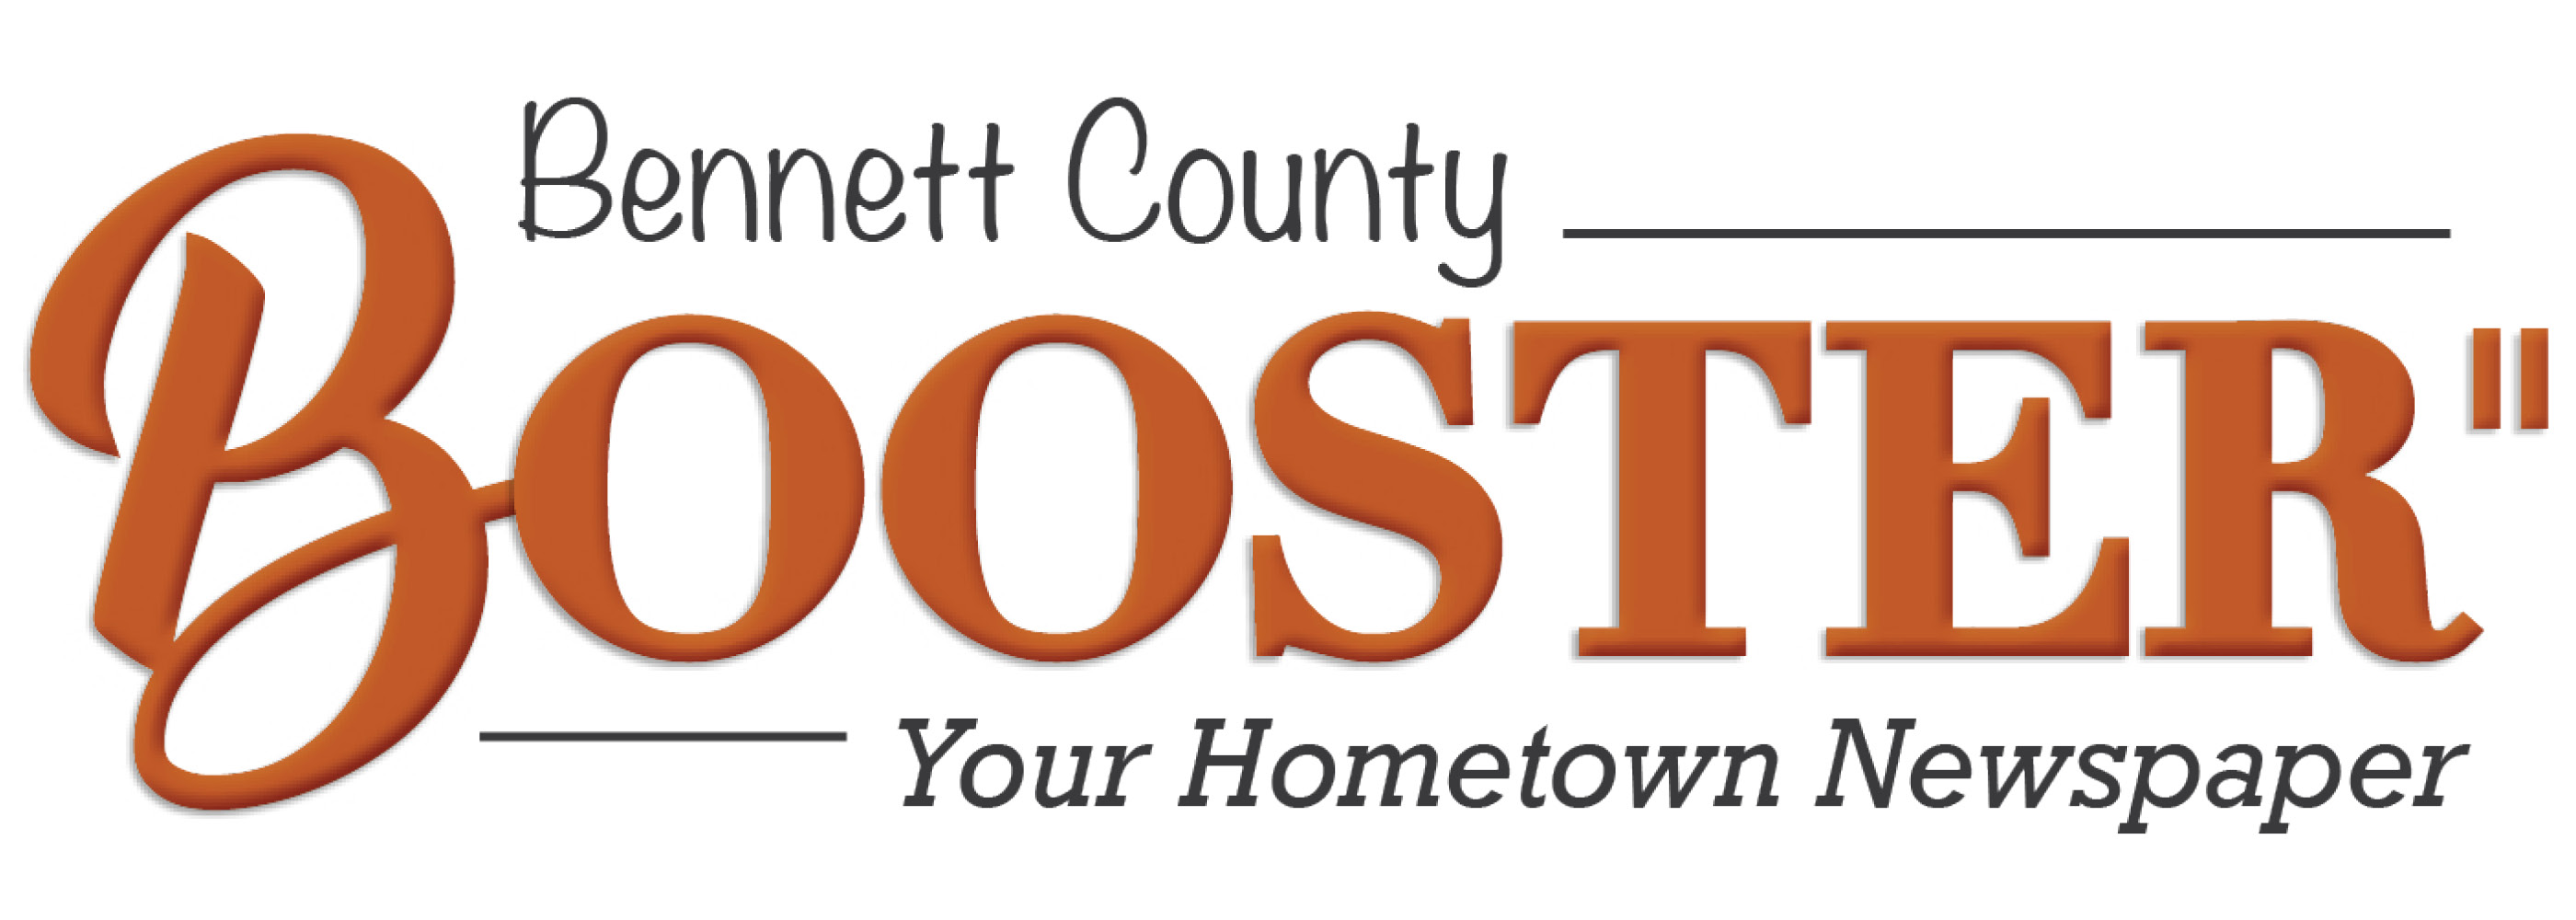 Bennett County Booster Home